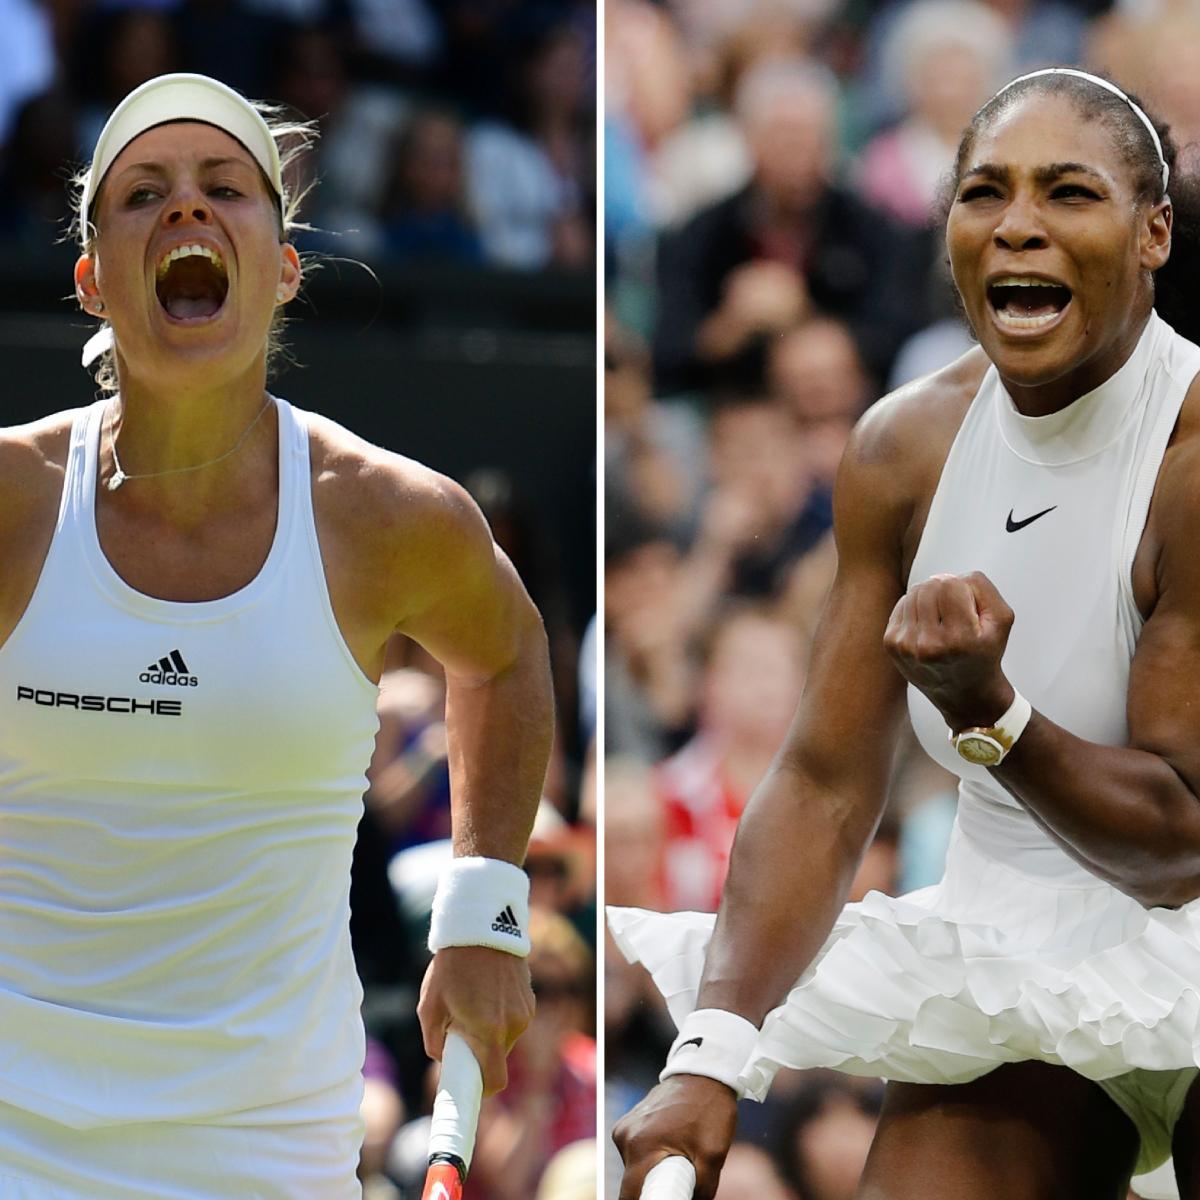 Wimbledon 2016 Women S Final Schedule Prediction And Prize Money News Scores Highlights